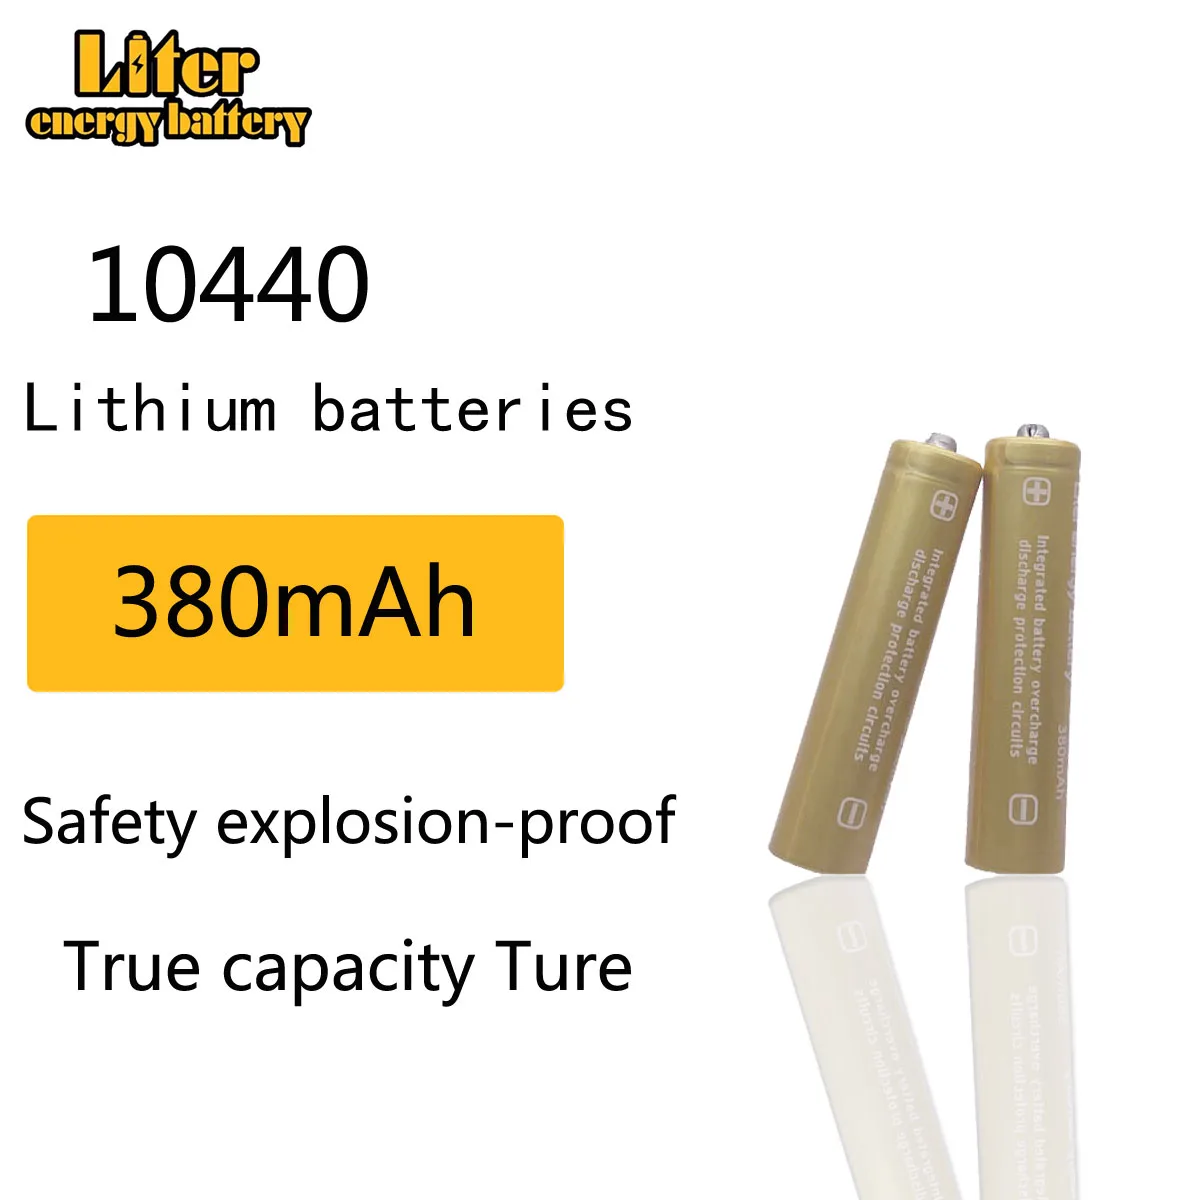 

Liter energy battery 2pcs TrustFire 3.7V 380mAh High Capacity 10440 Li-ion Rechargeable for LED Flashlights Laptop Batteries